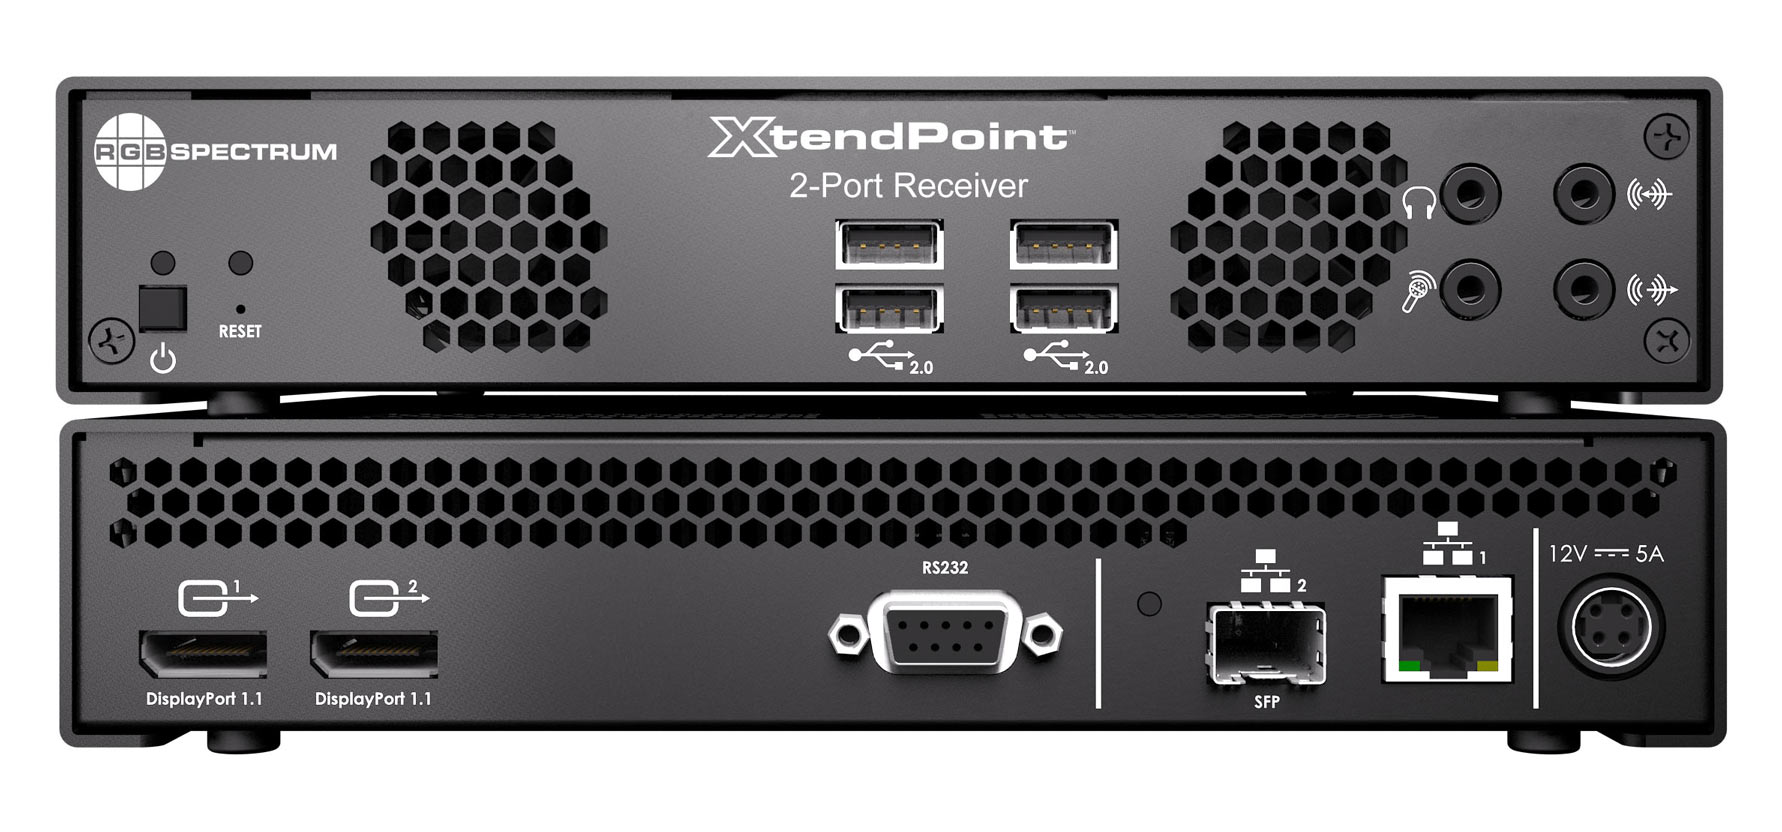 XtendPoint 2-Port Receiver